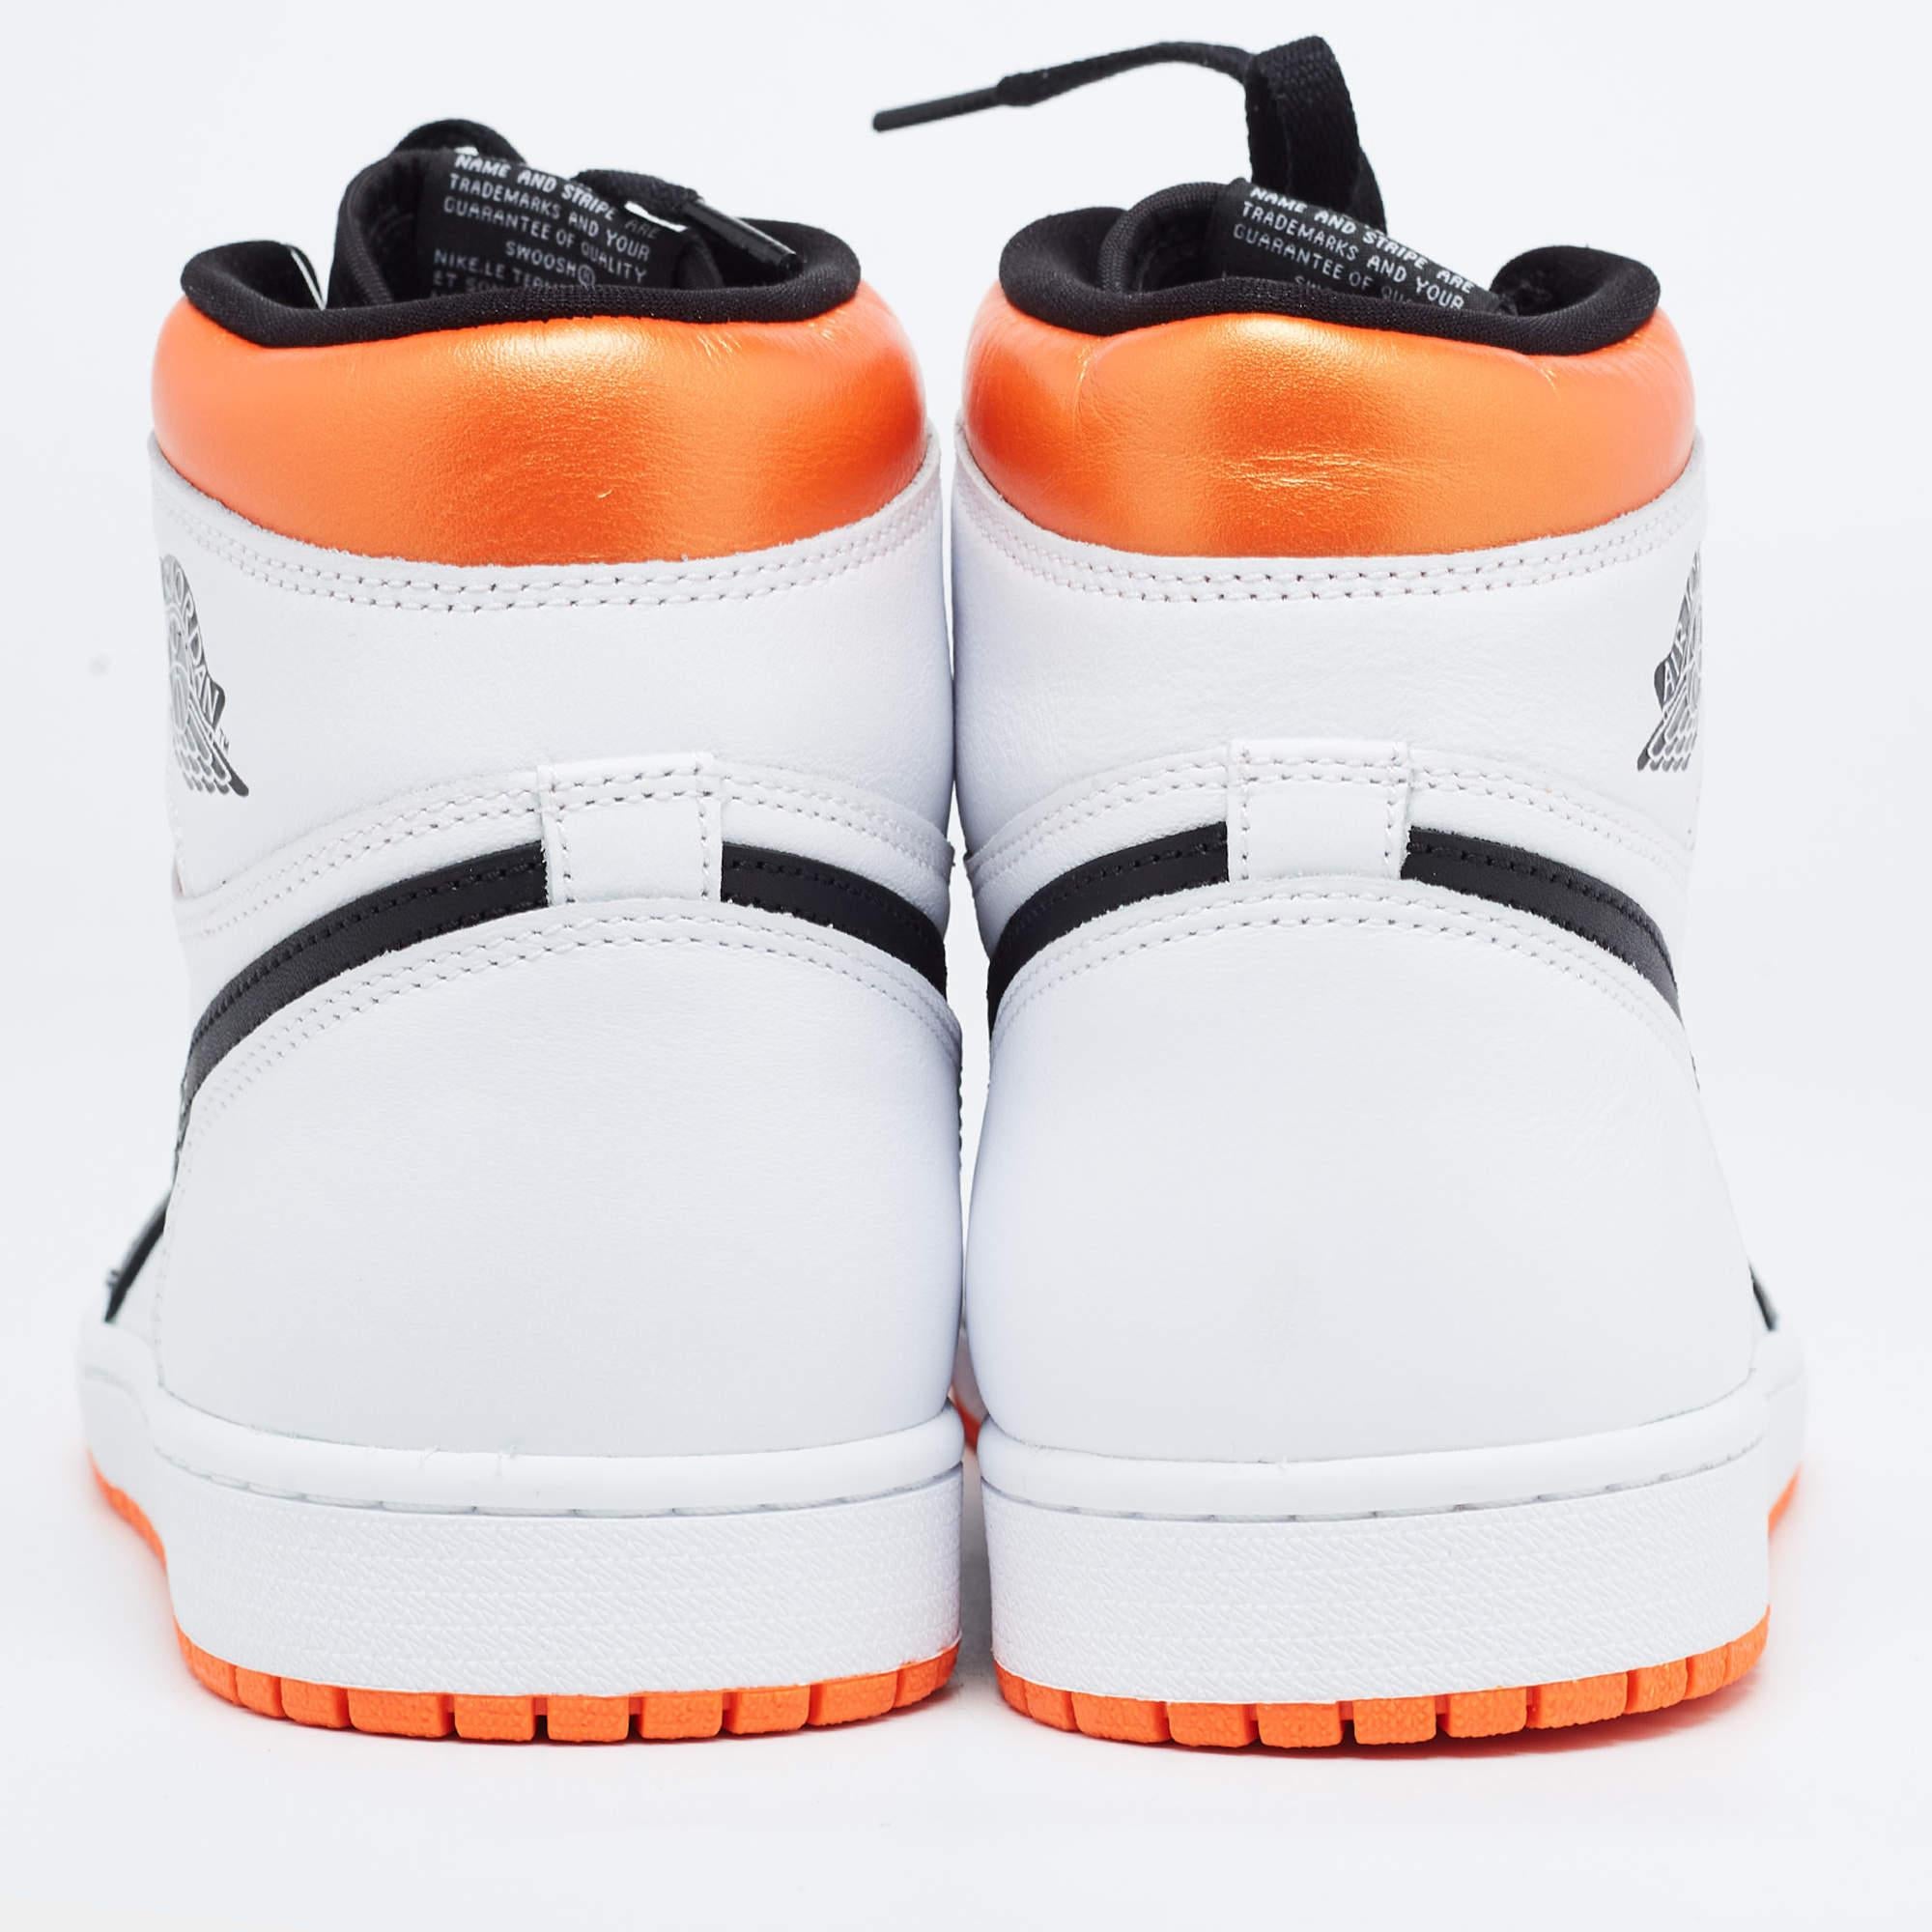 Men's Air Jordan Leather Jordan 1 Retro High Electro Orange Sneakers Size 44